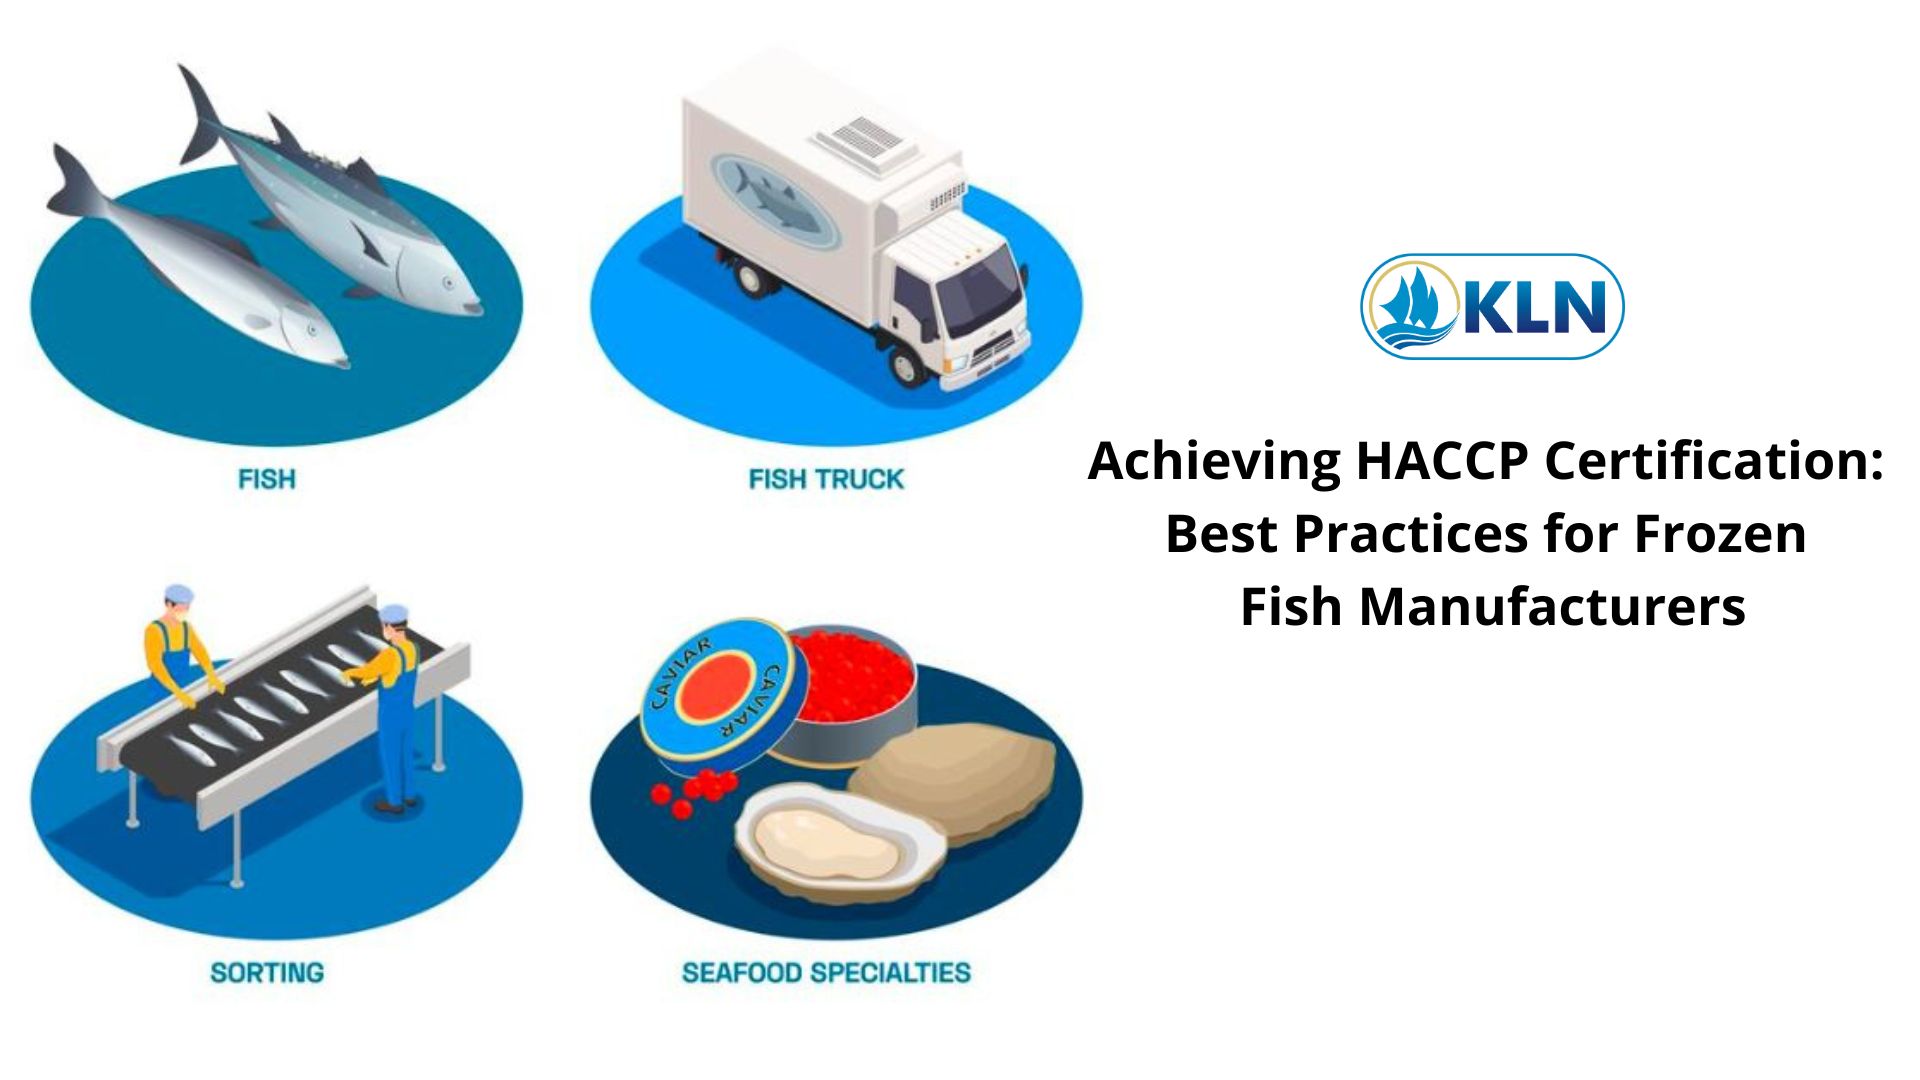 Achieving HACCP Certification: Best Practices for Frozen Fish Manufacturers